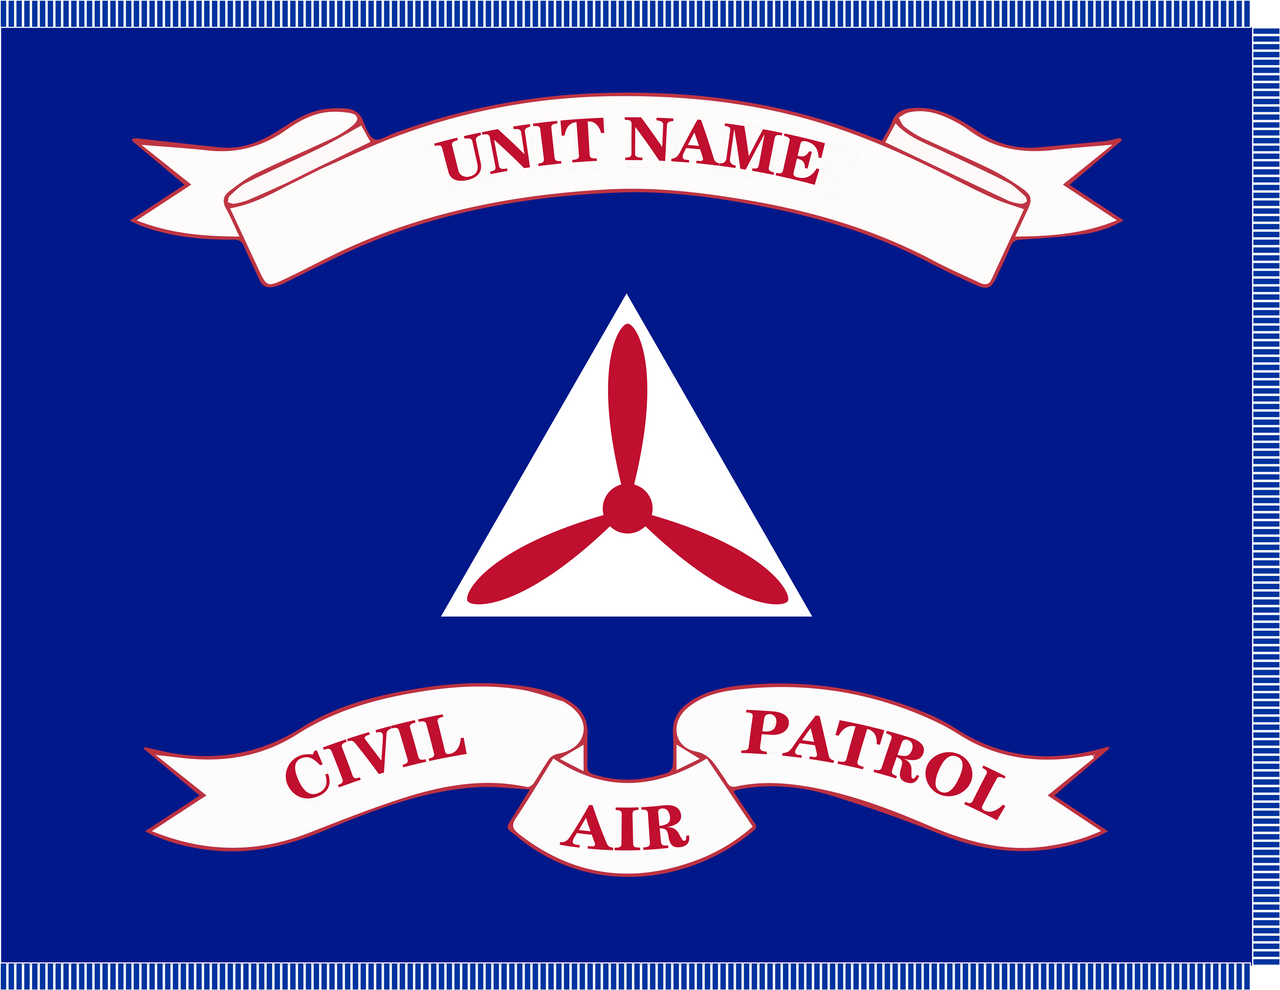 Official Civil Air Patrol Unit Flag - Colonial Flag